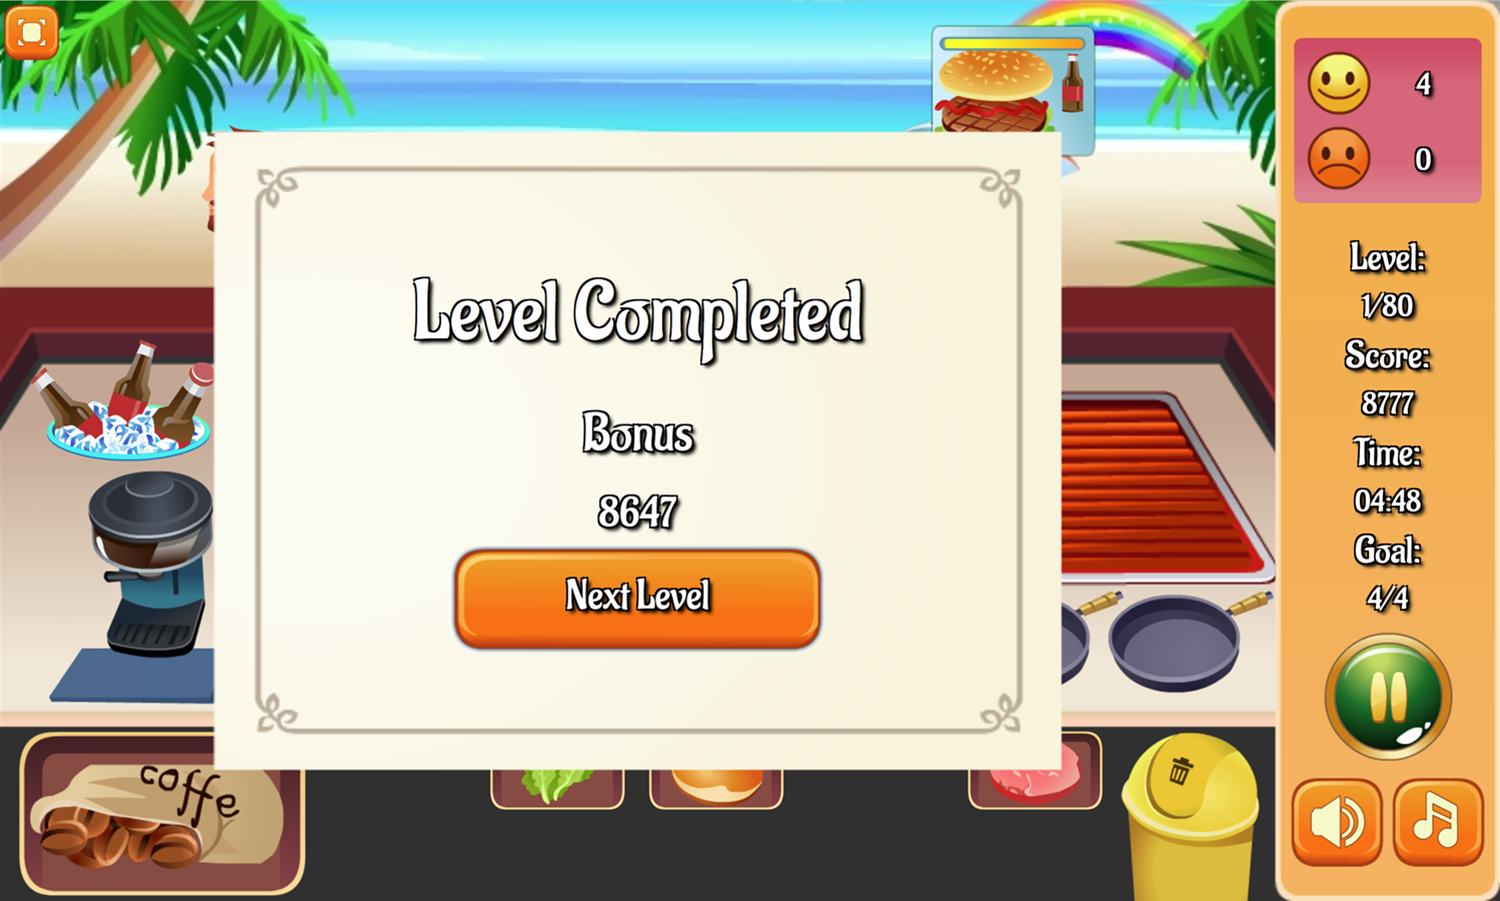 Hotdog Shop Game Level Completed Screen Screenshot.